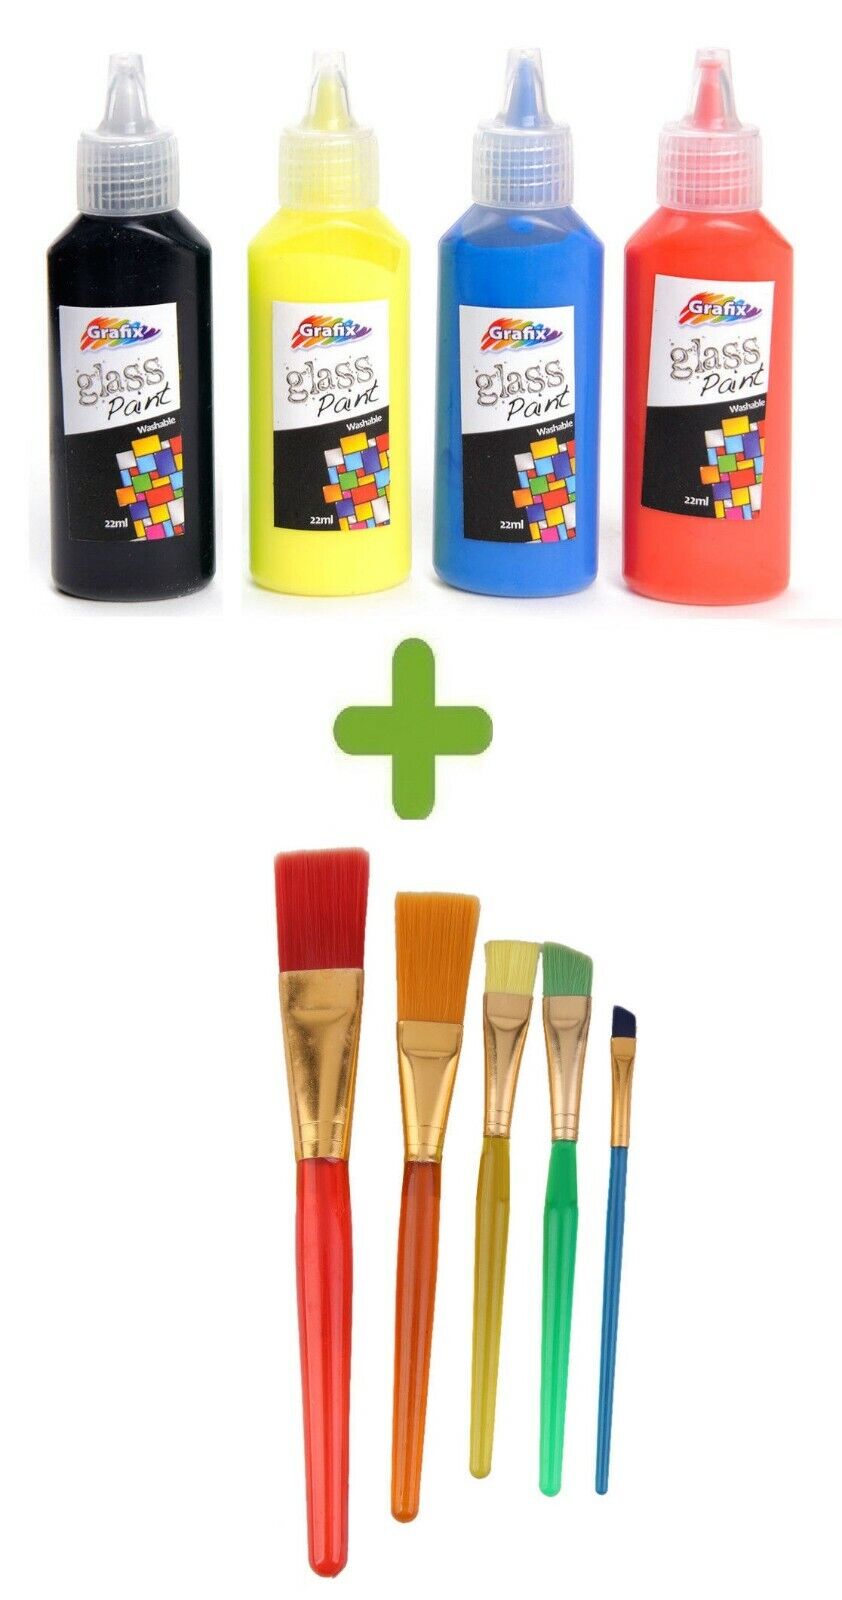 Beclen Harp Childrens 22ml Glass Paints set - 5 Different Shaped Brush Set Creative Art Set